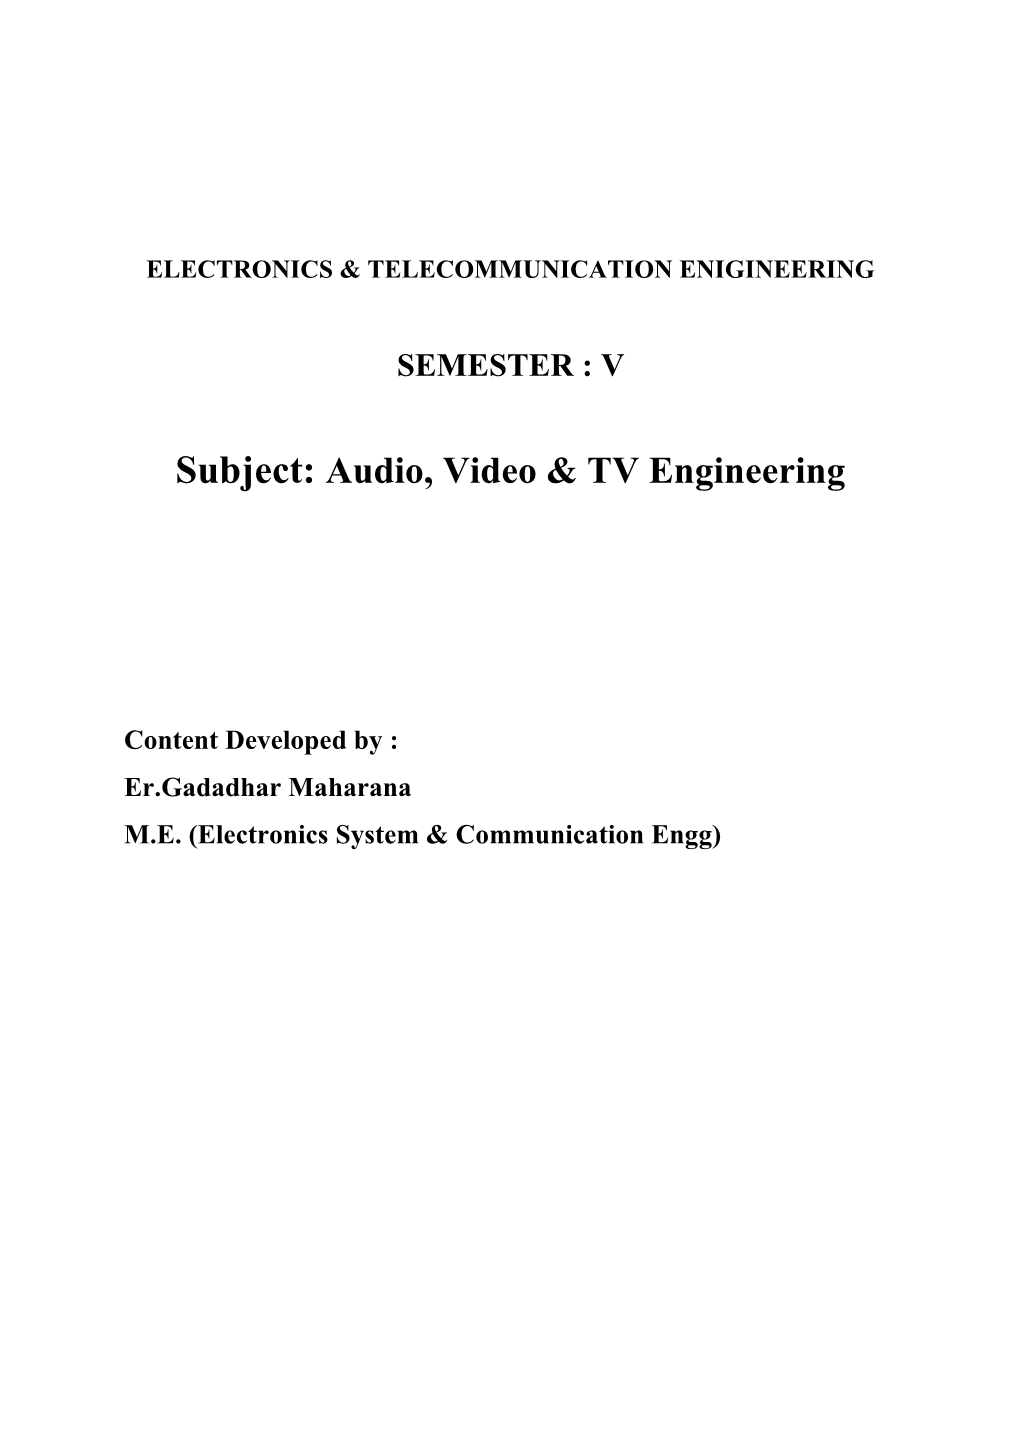 Subject: Audio, Video & TV Engineering